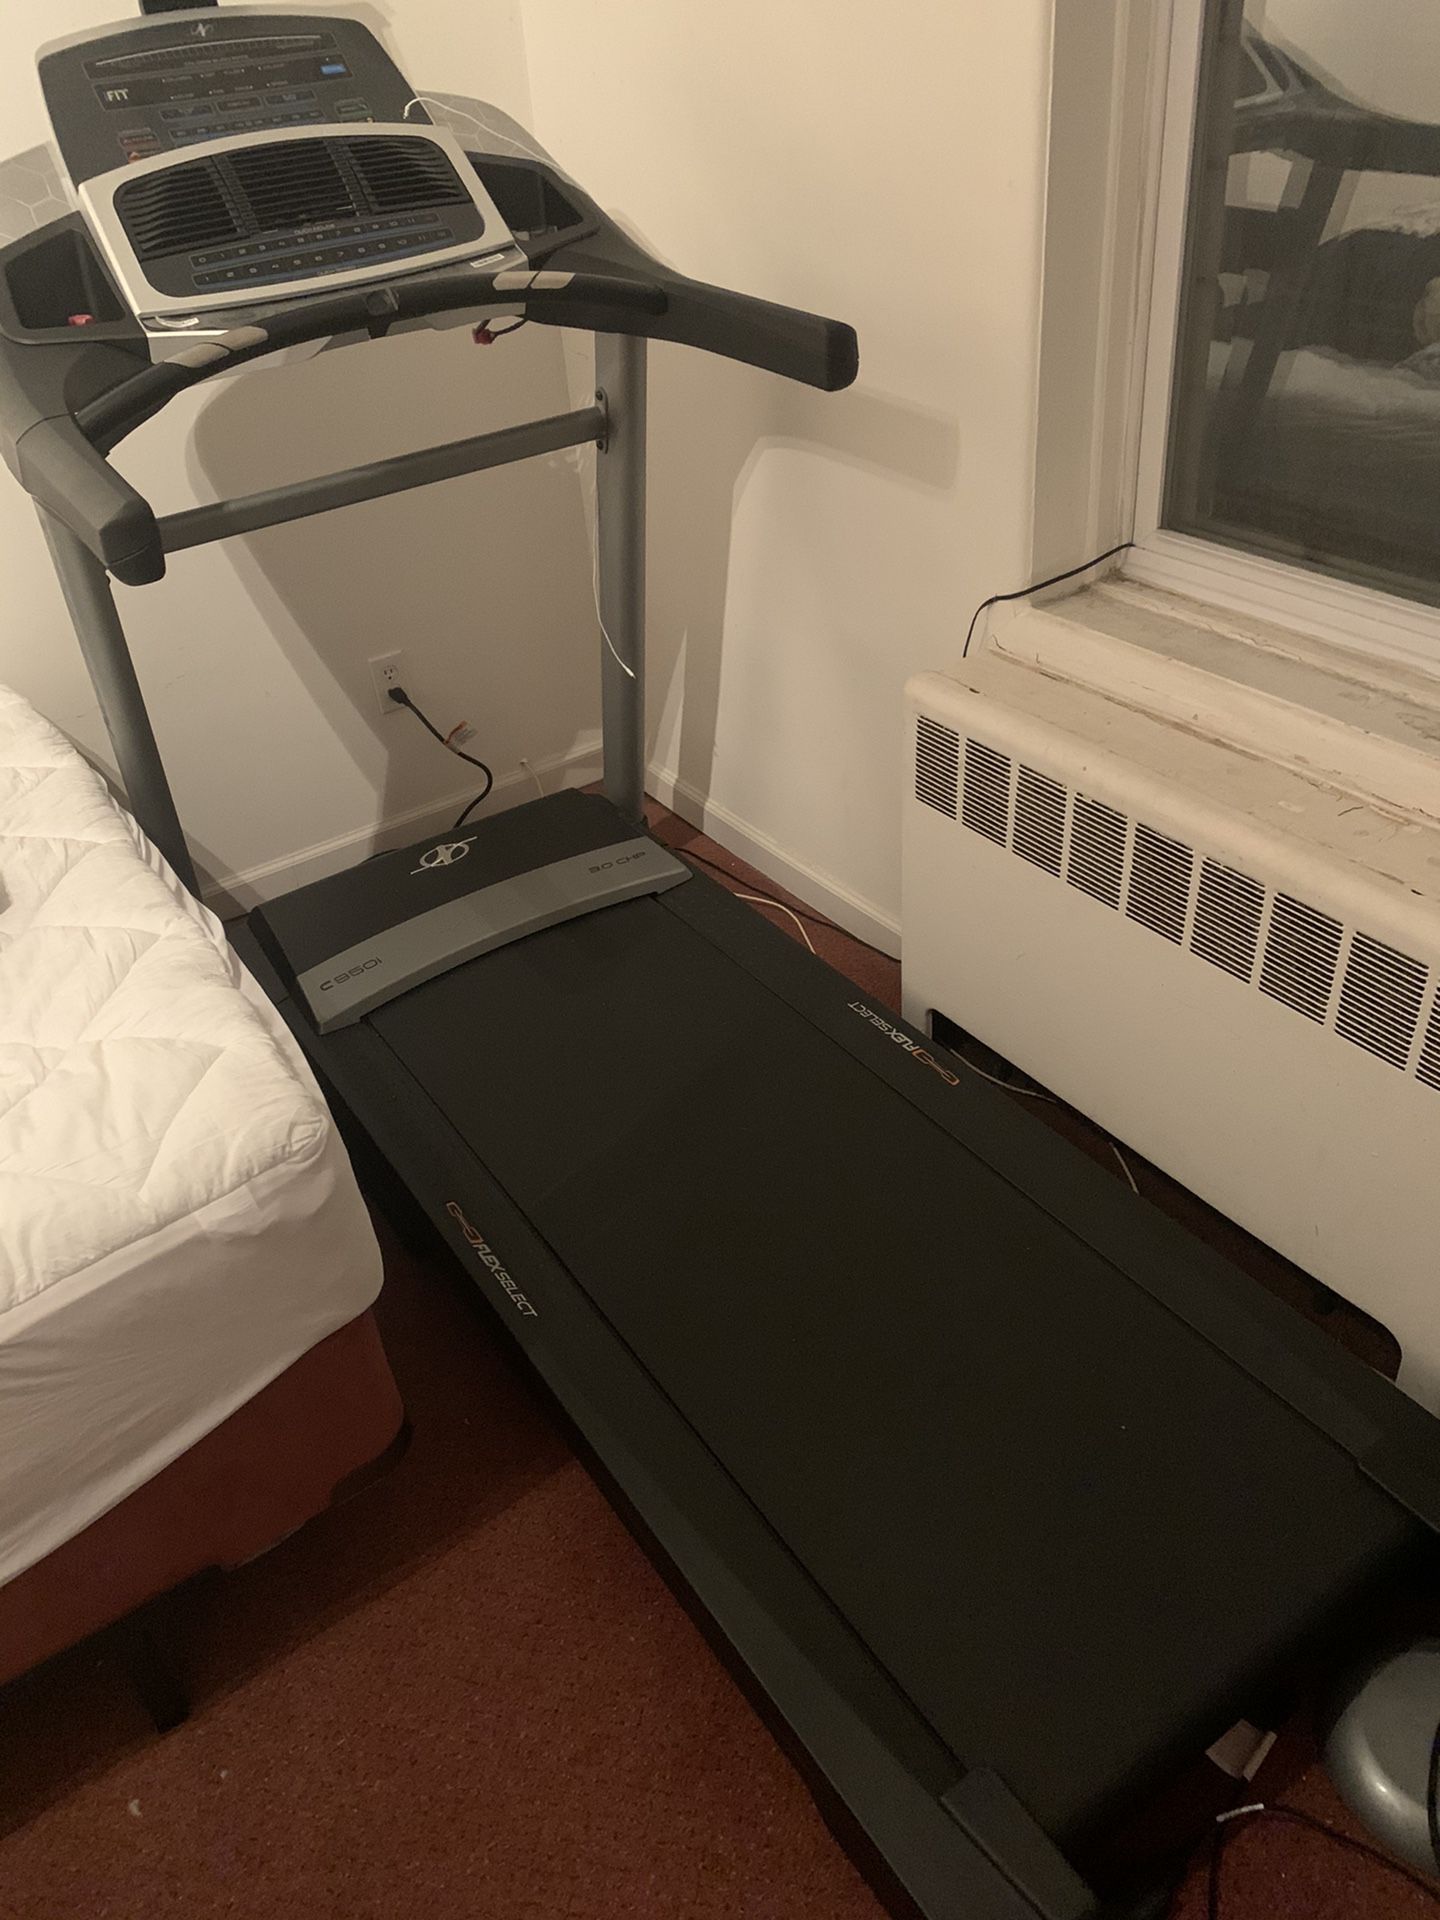 Norditrack c950i treadmill almost brand new original price 1500$